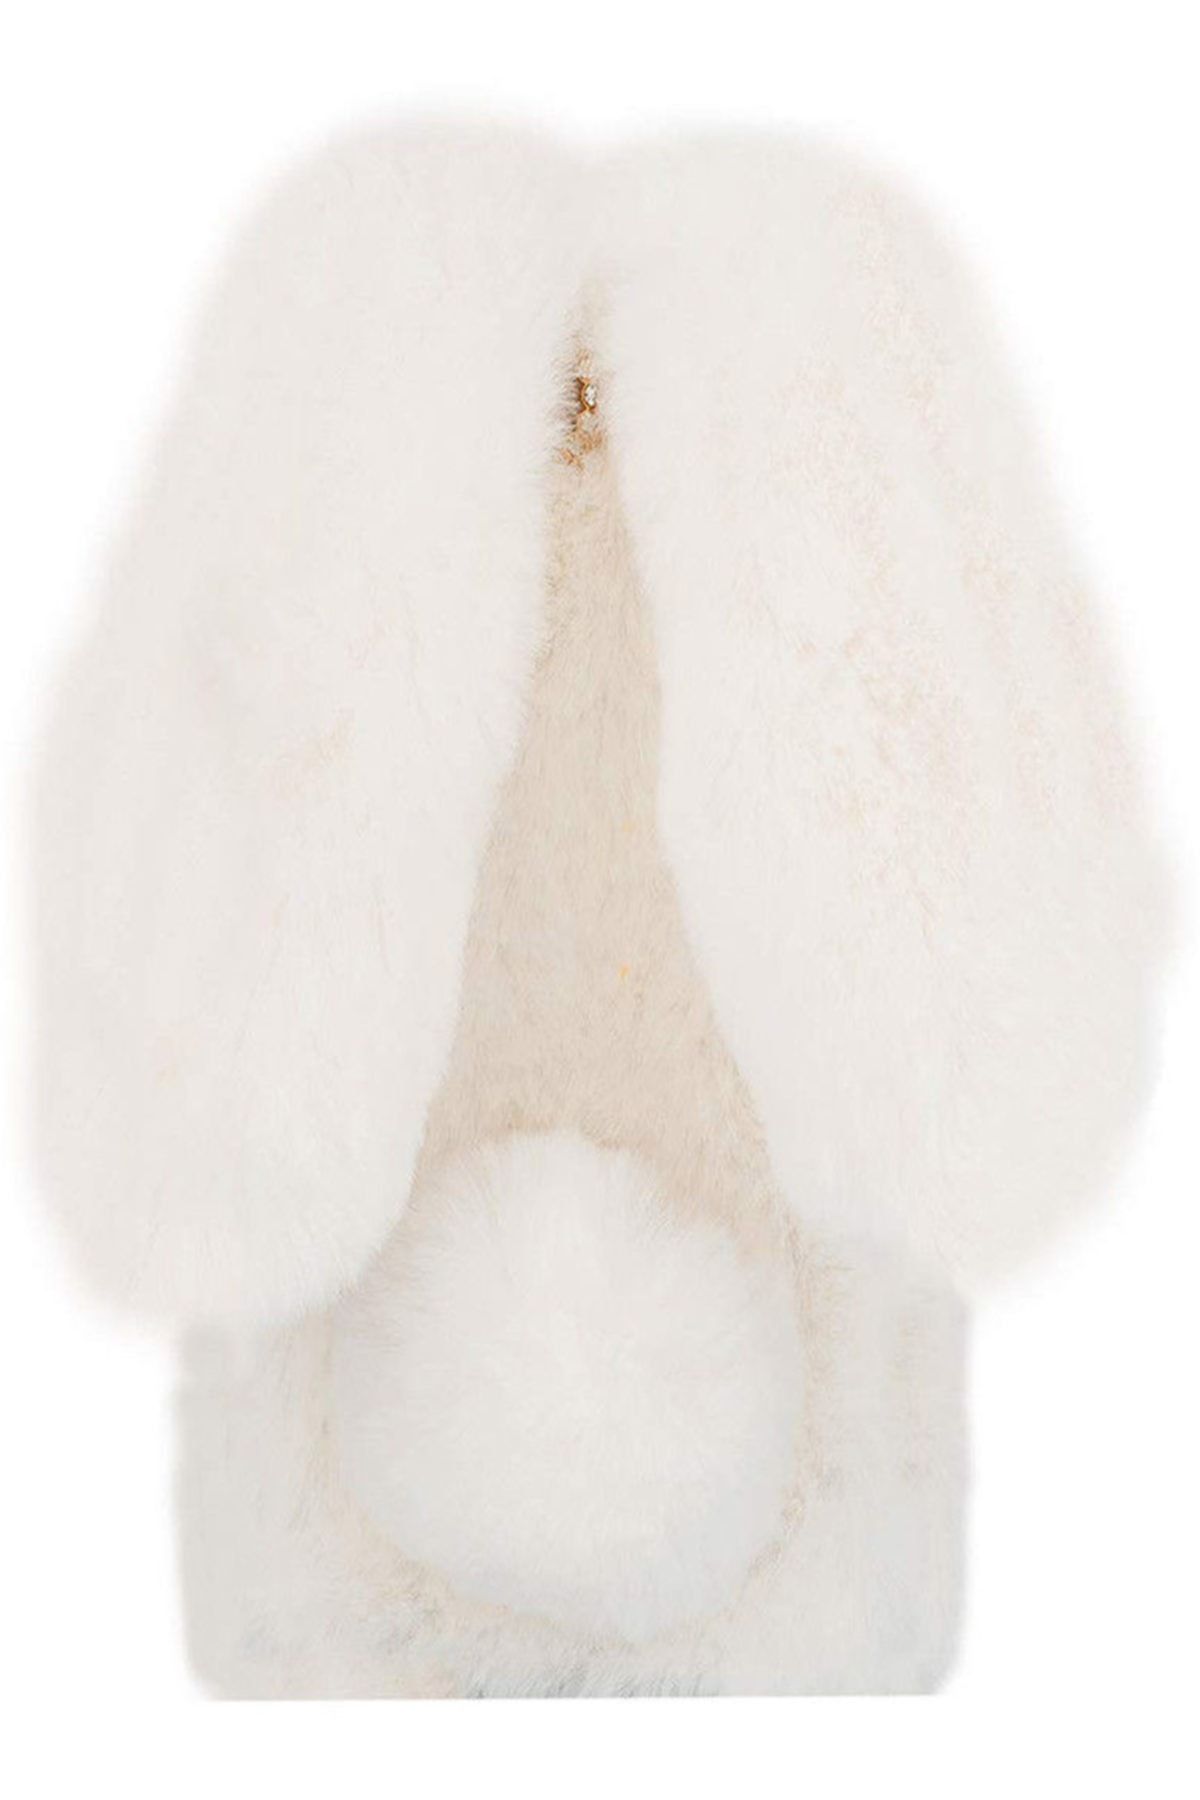 TahTicMer Samsung Galaxy A10 A105 Kılıf Peluş Tüylü Tavşan Kulak Silikon Tpu Kapak Beyaz